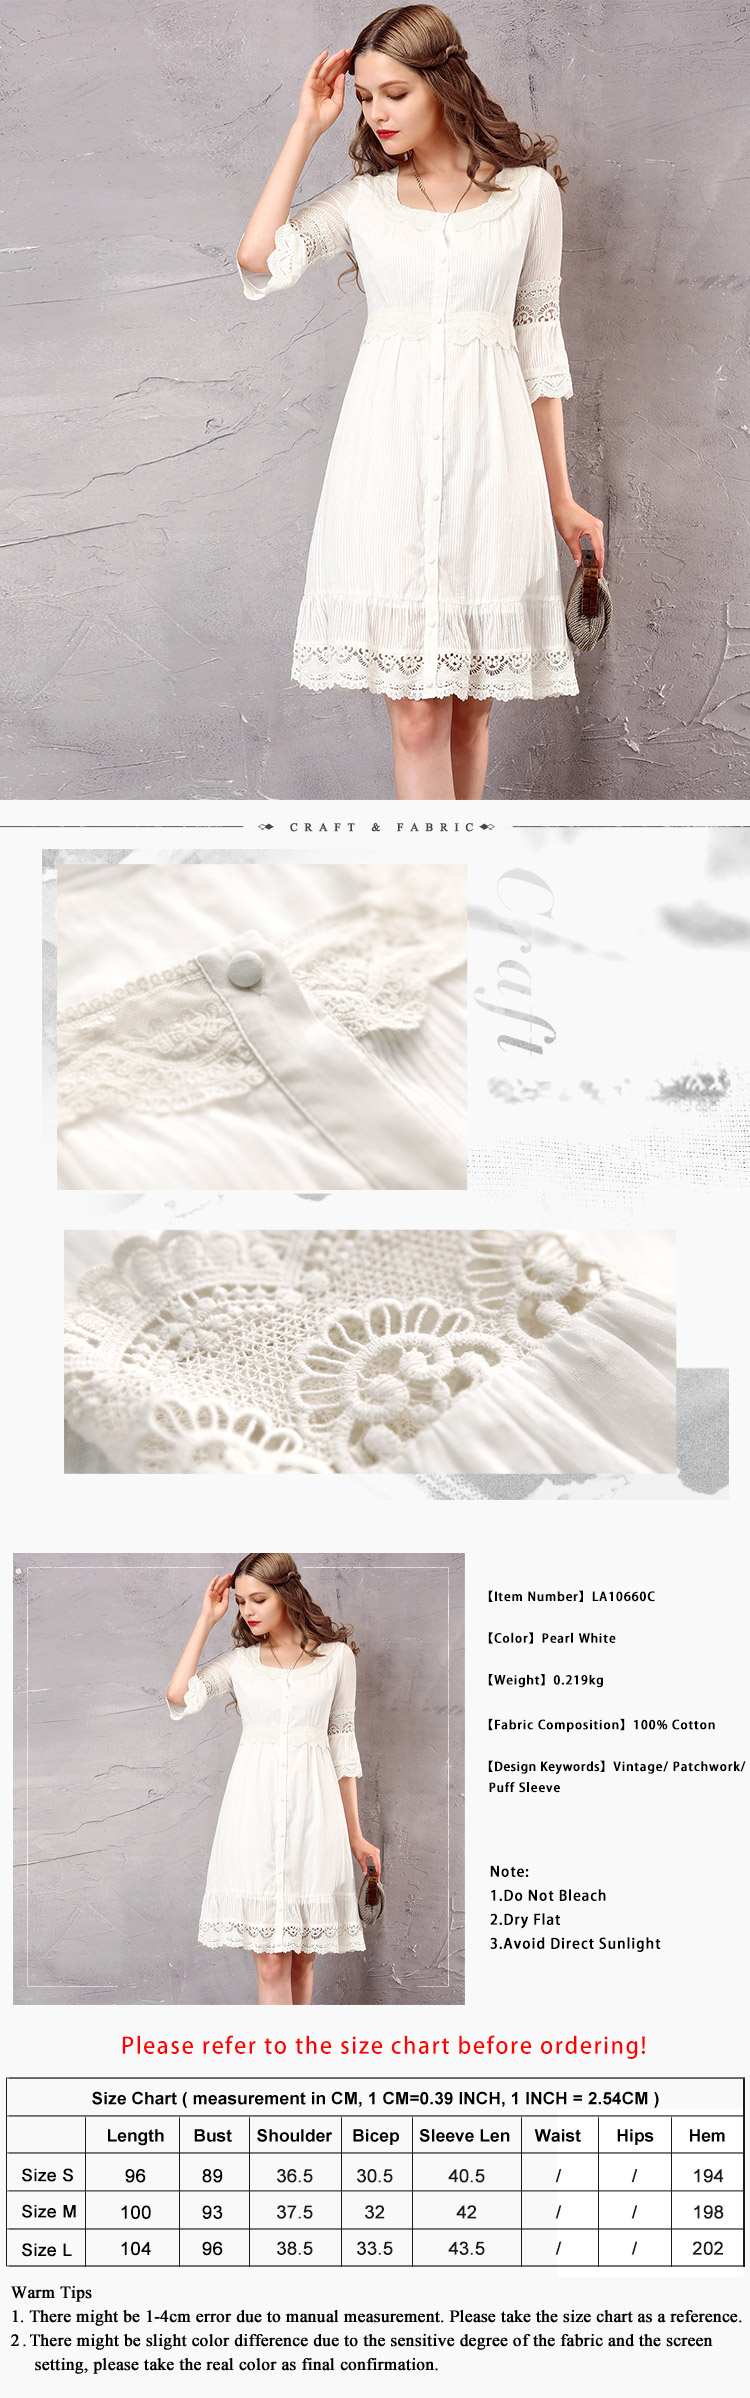 Artka-Women39s-Spring-New-White-Lace-Patchwork-Cotton-Dress-Vintage-O-Neck-Puff-Sleeve-Empire-Waist--32675446268